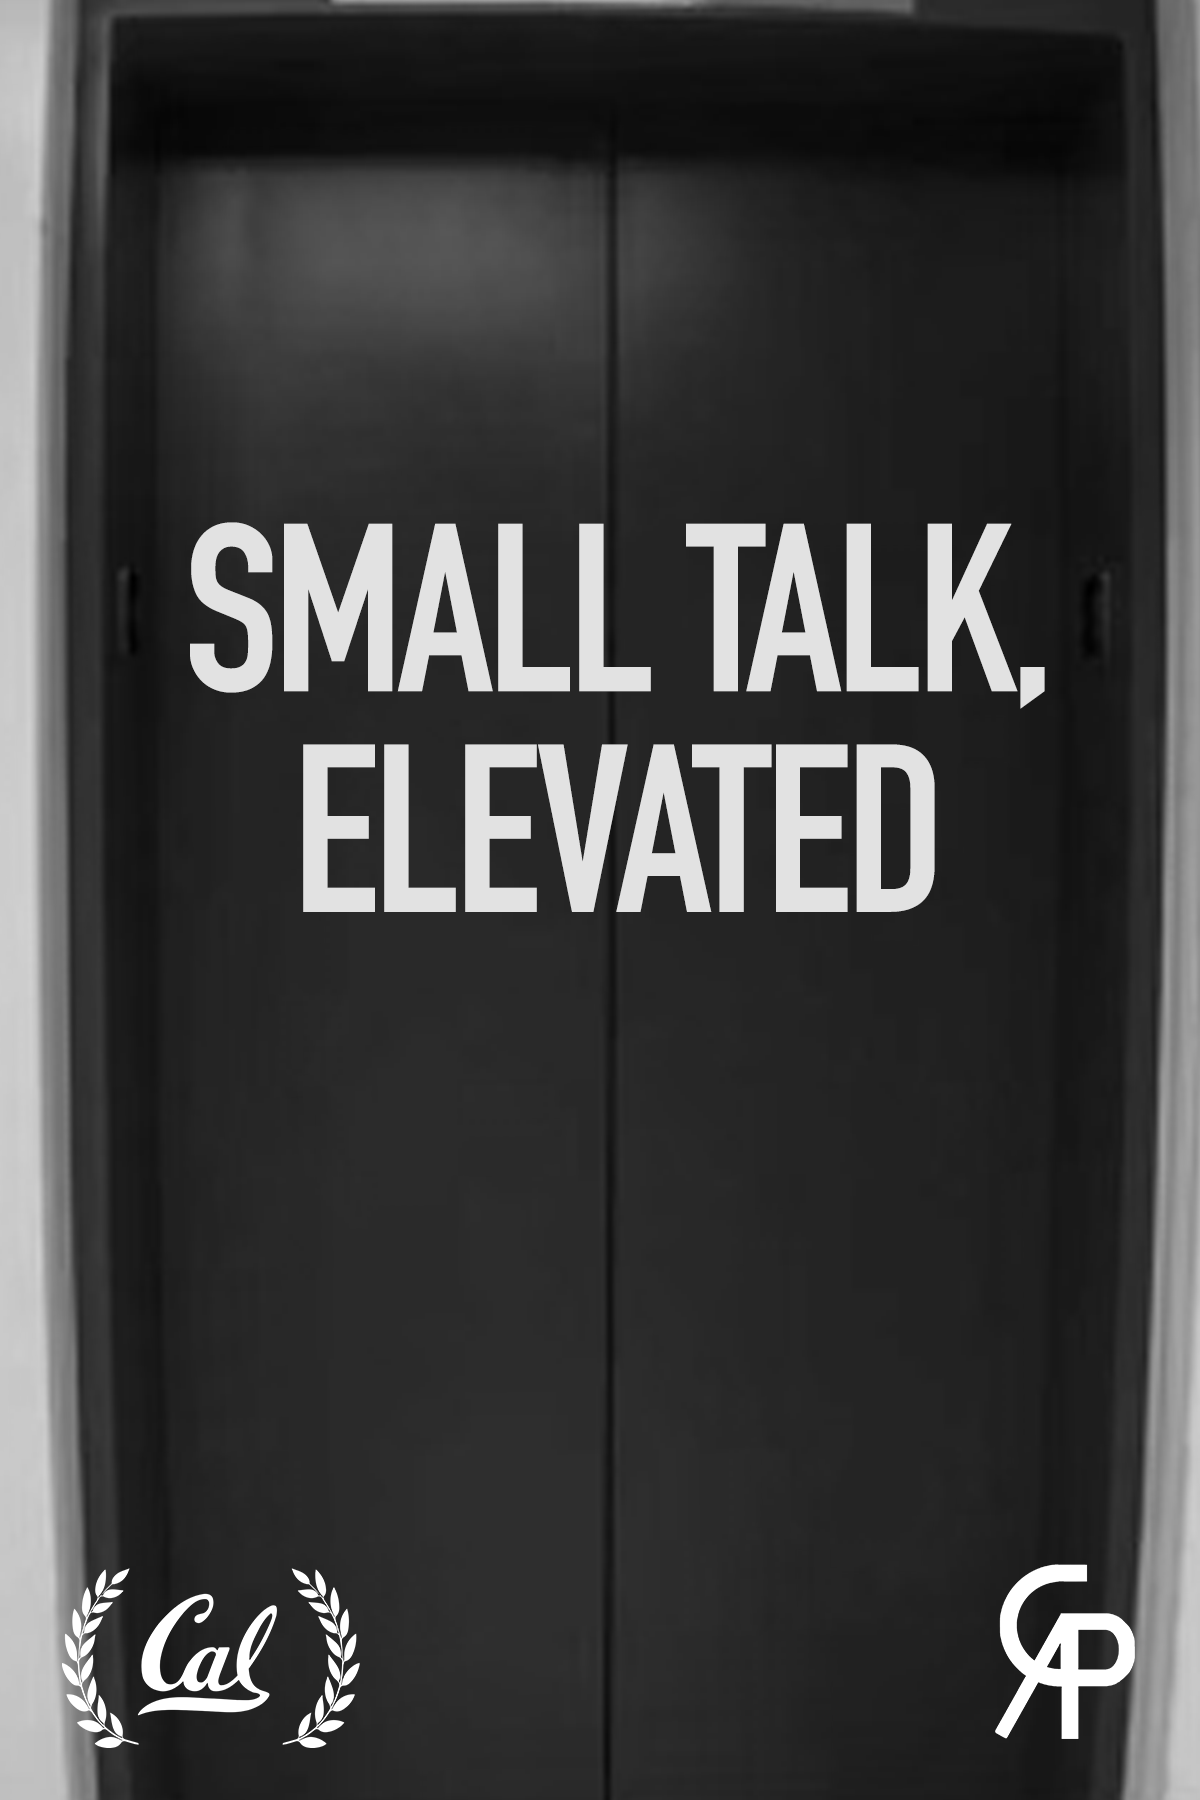 Small Talk, Elevated